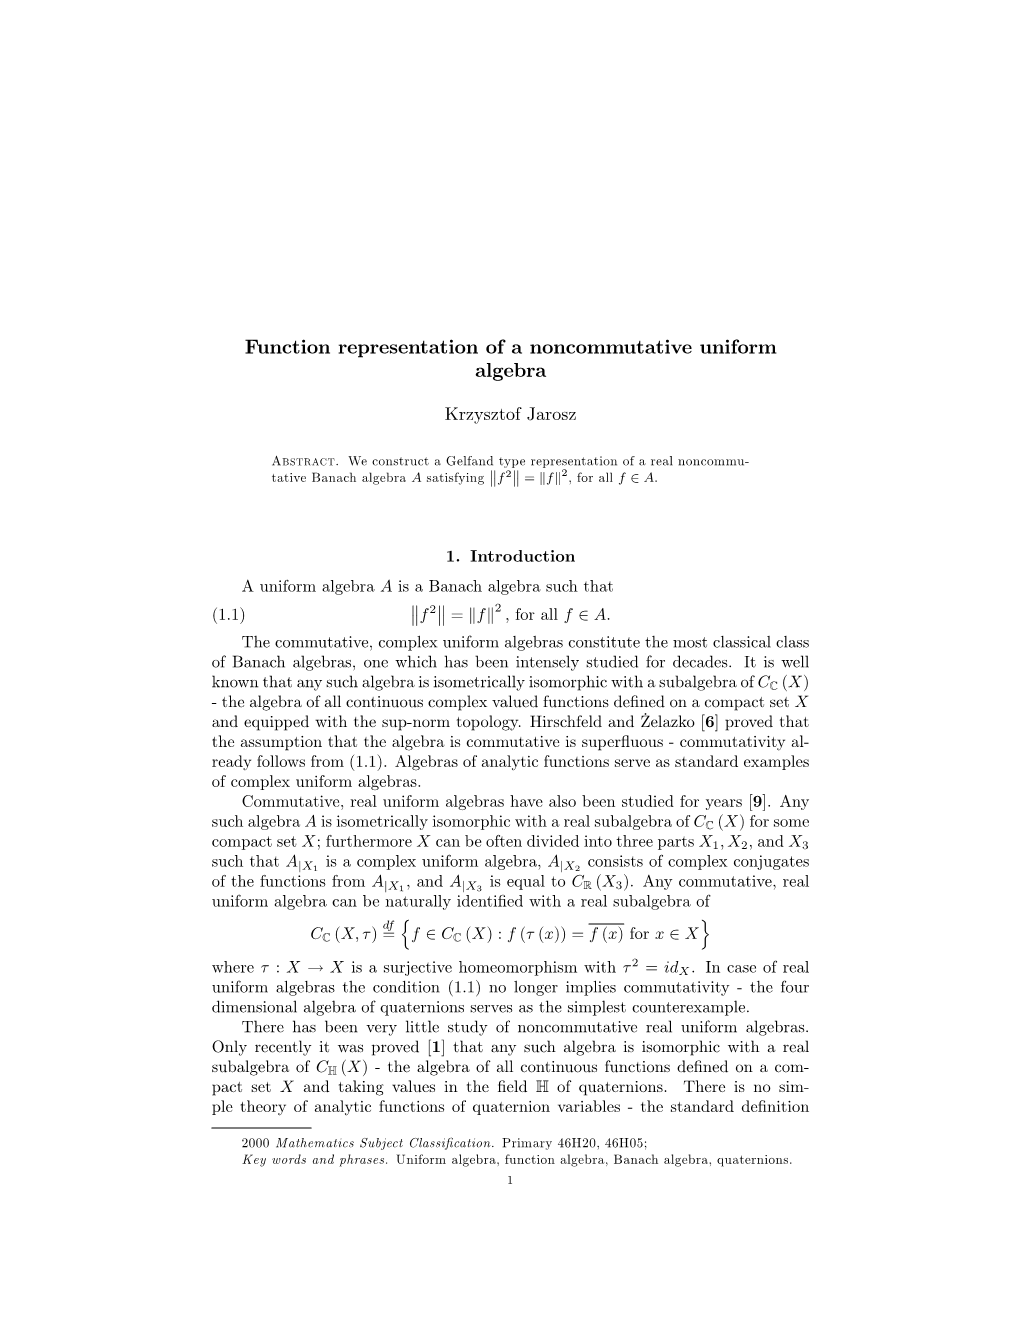 Function Representation of a Noncommutative Uniform Algebra